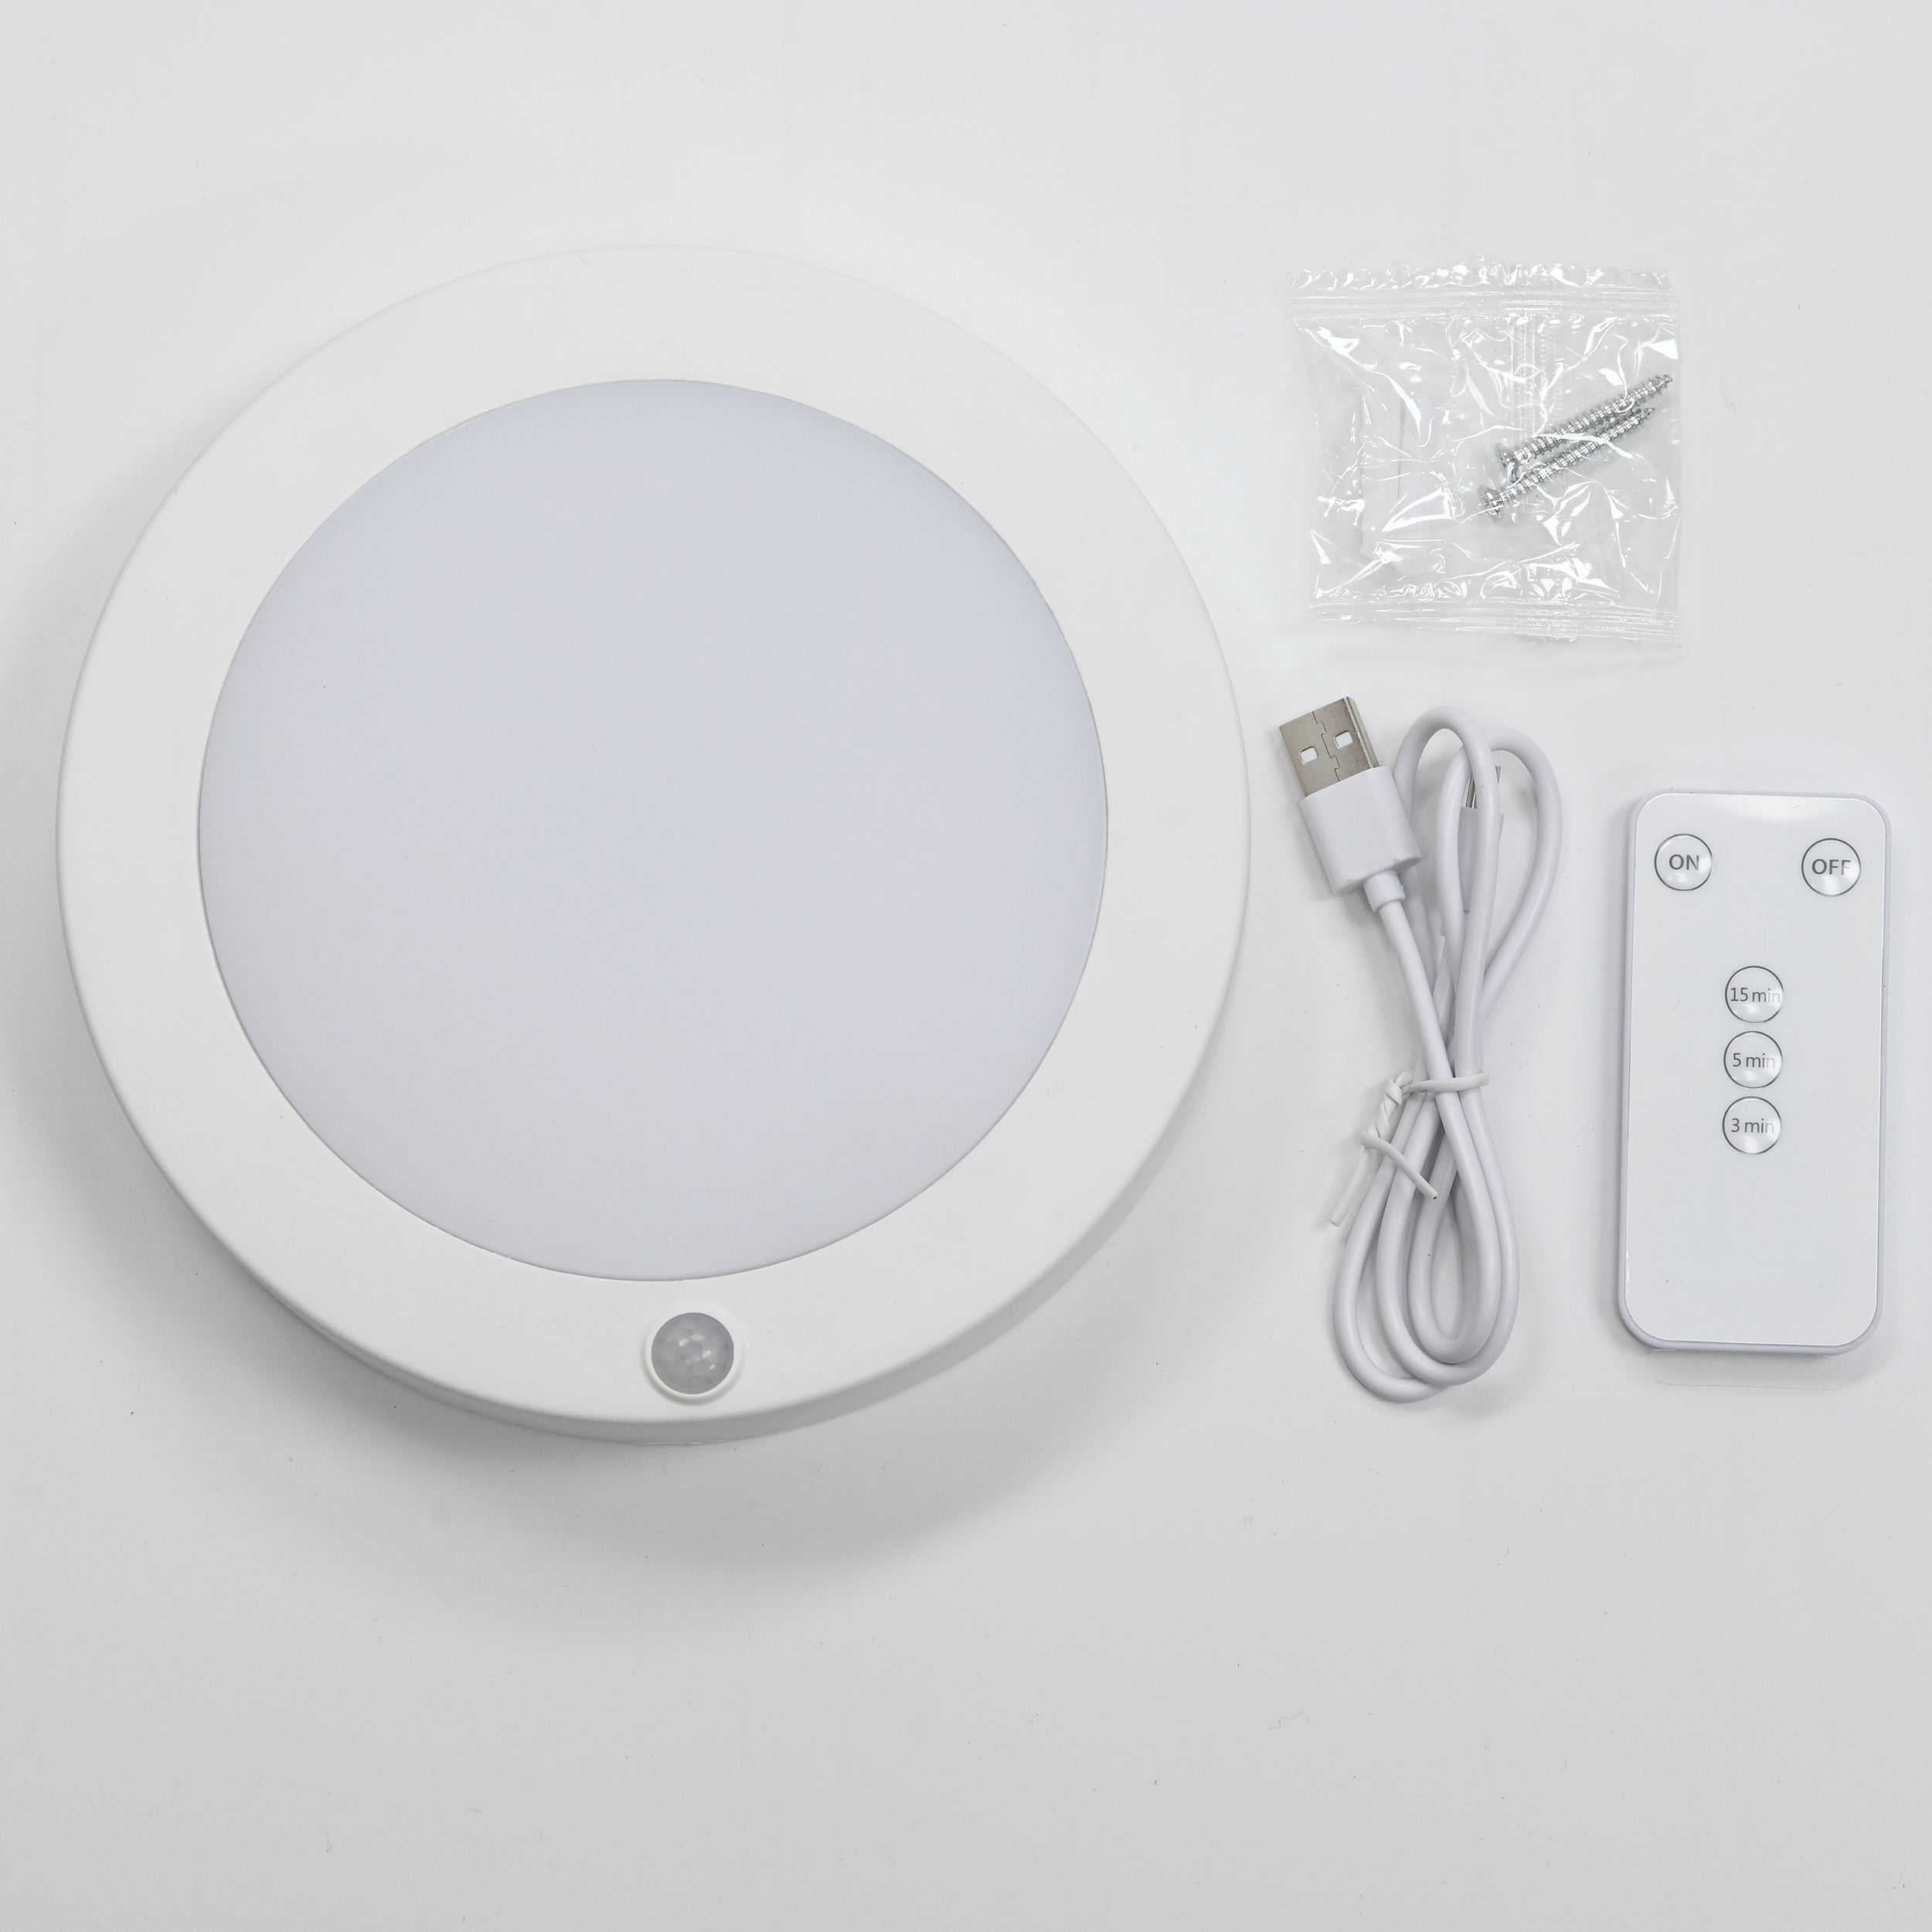 Rechargeable 7" LED Circle Light- Motion Sensing